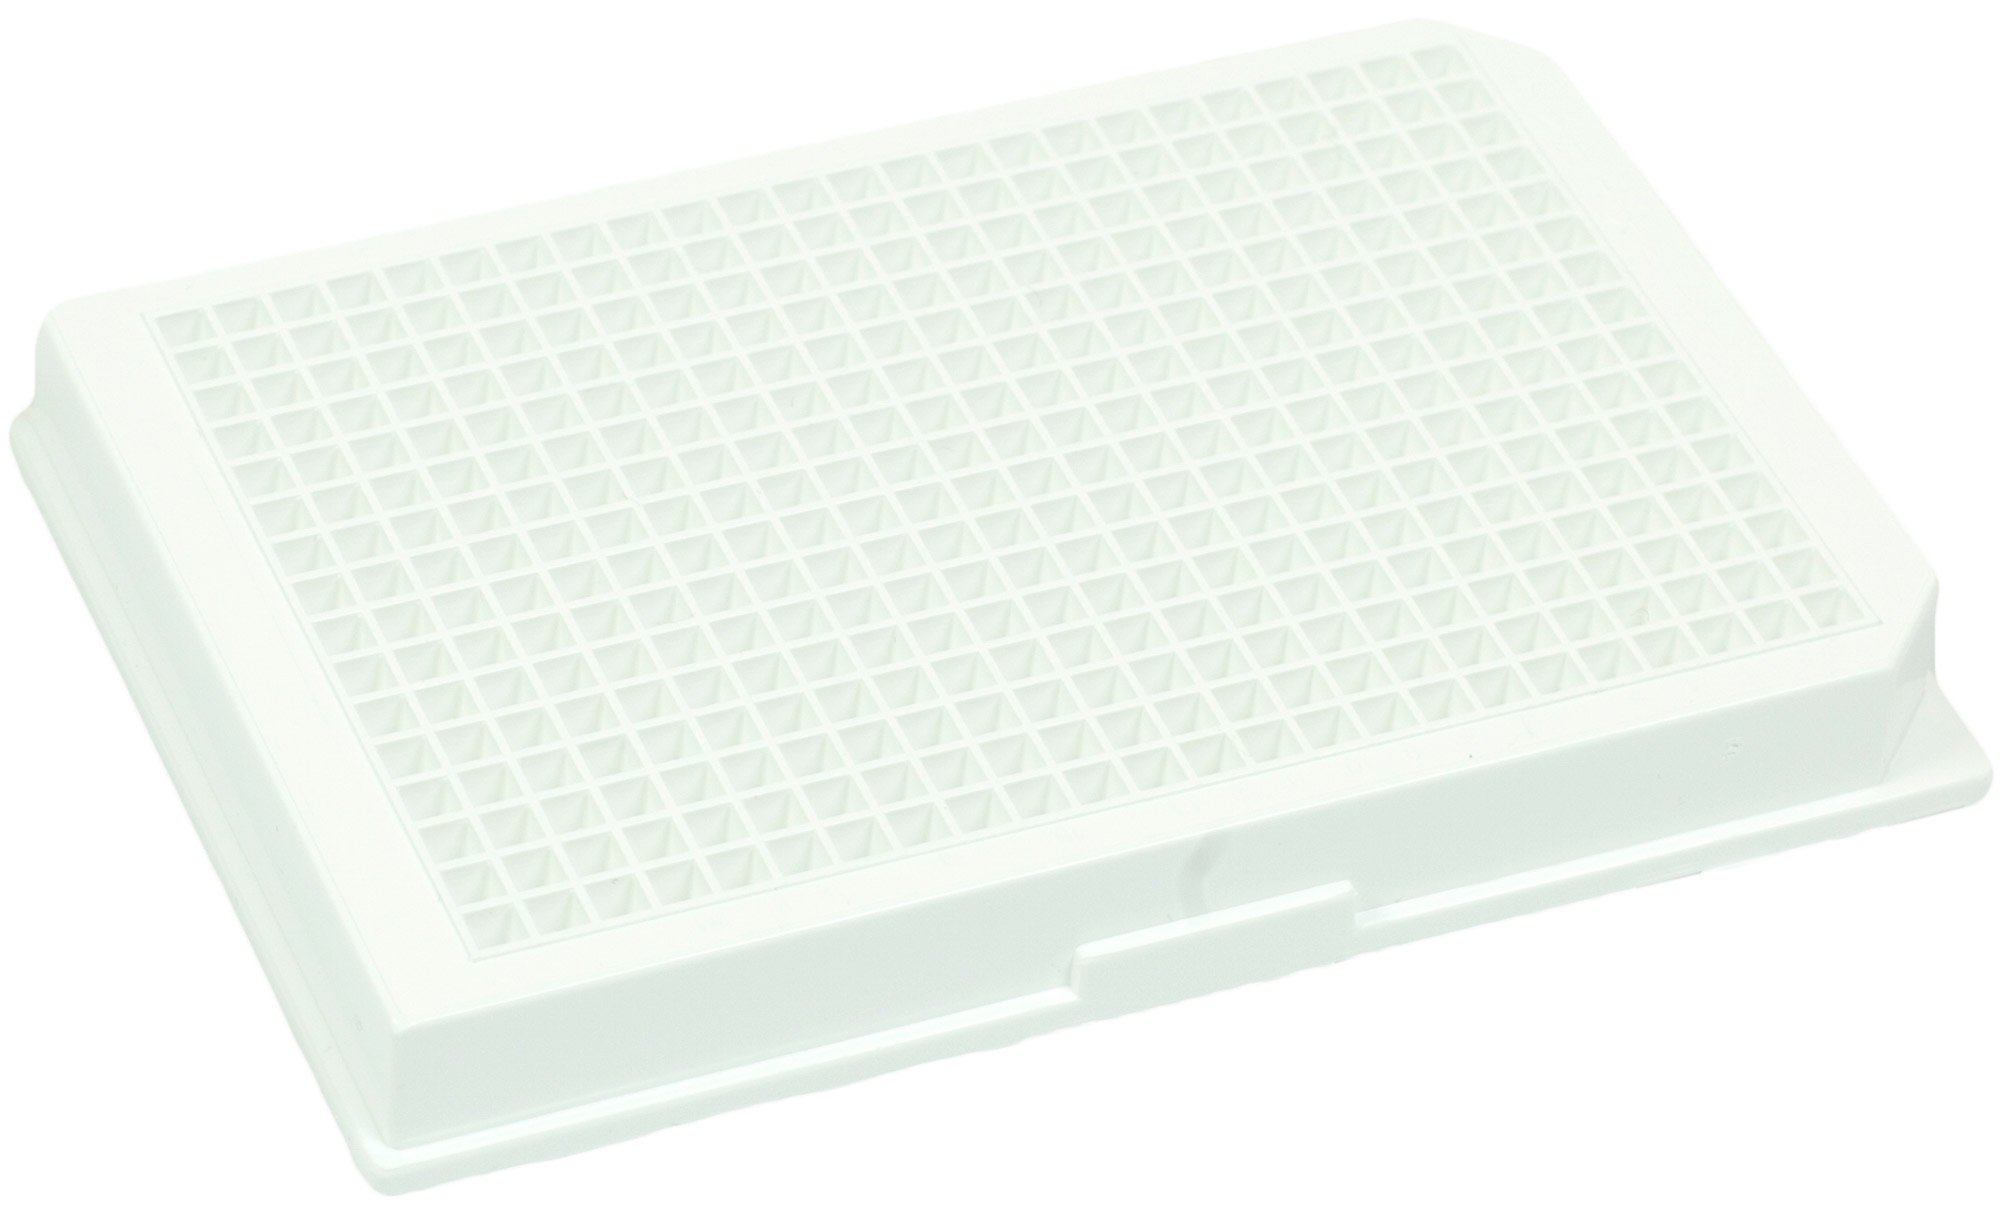 BRANDplates pureGrade PS Non-Treated Non-Sterile Surface 384-Well Plate - White, Transparent F-Bottom